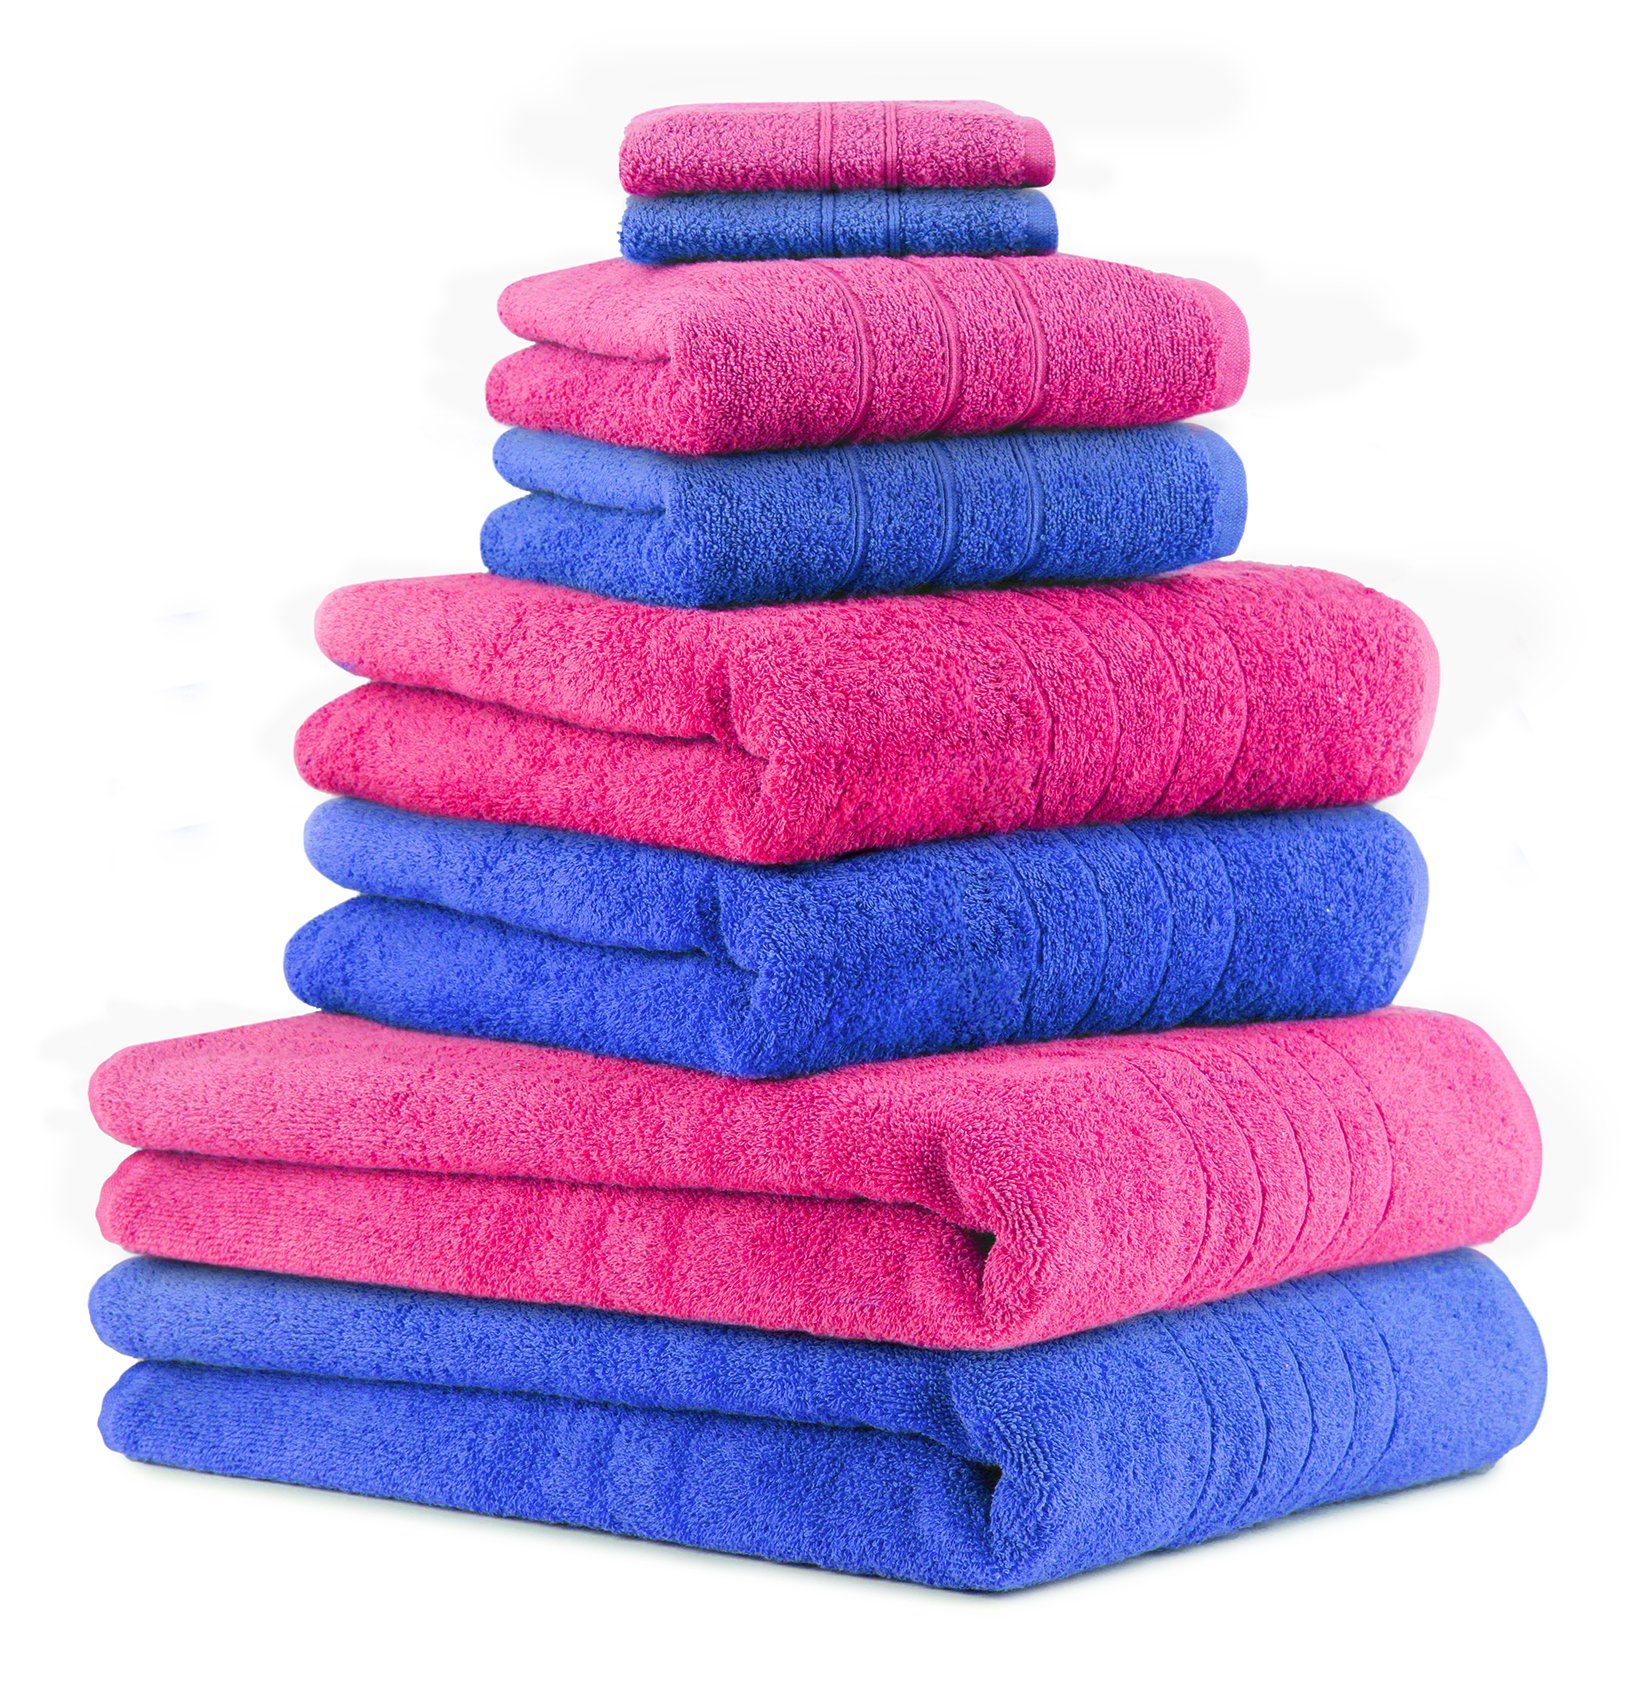 Betz Handtuch Set 8-TLG. Handtuch-Set Deluxe 100% Baumwolle 2 Badetücher 2 Duschtücher 2 Handtücher 2 Seiftücher Farbe Fuchsia und blau, 100% Baumwolle, (8-tlg)